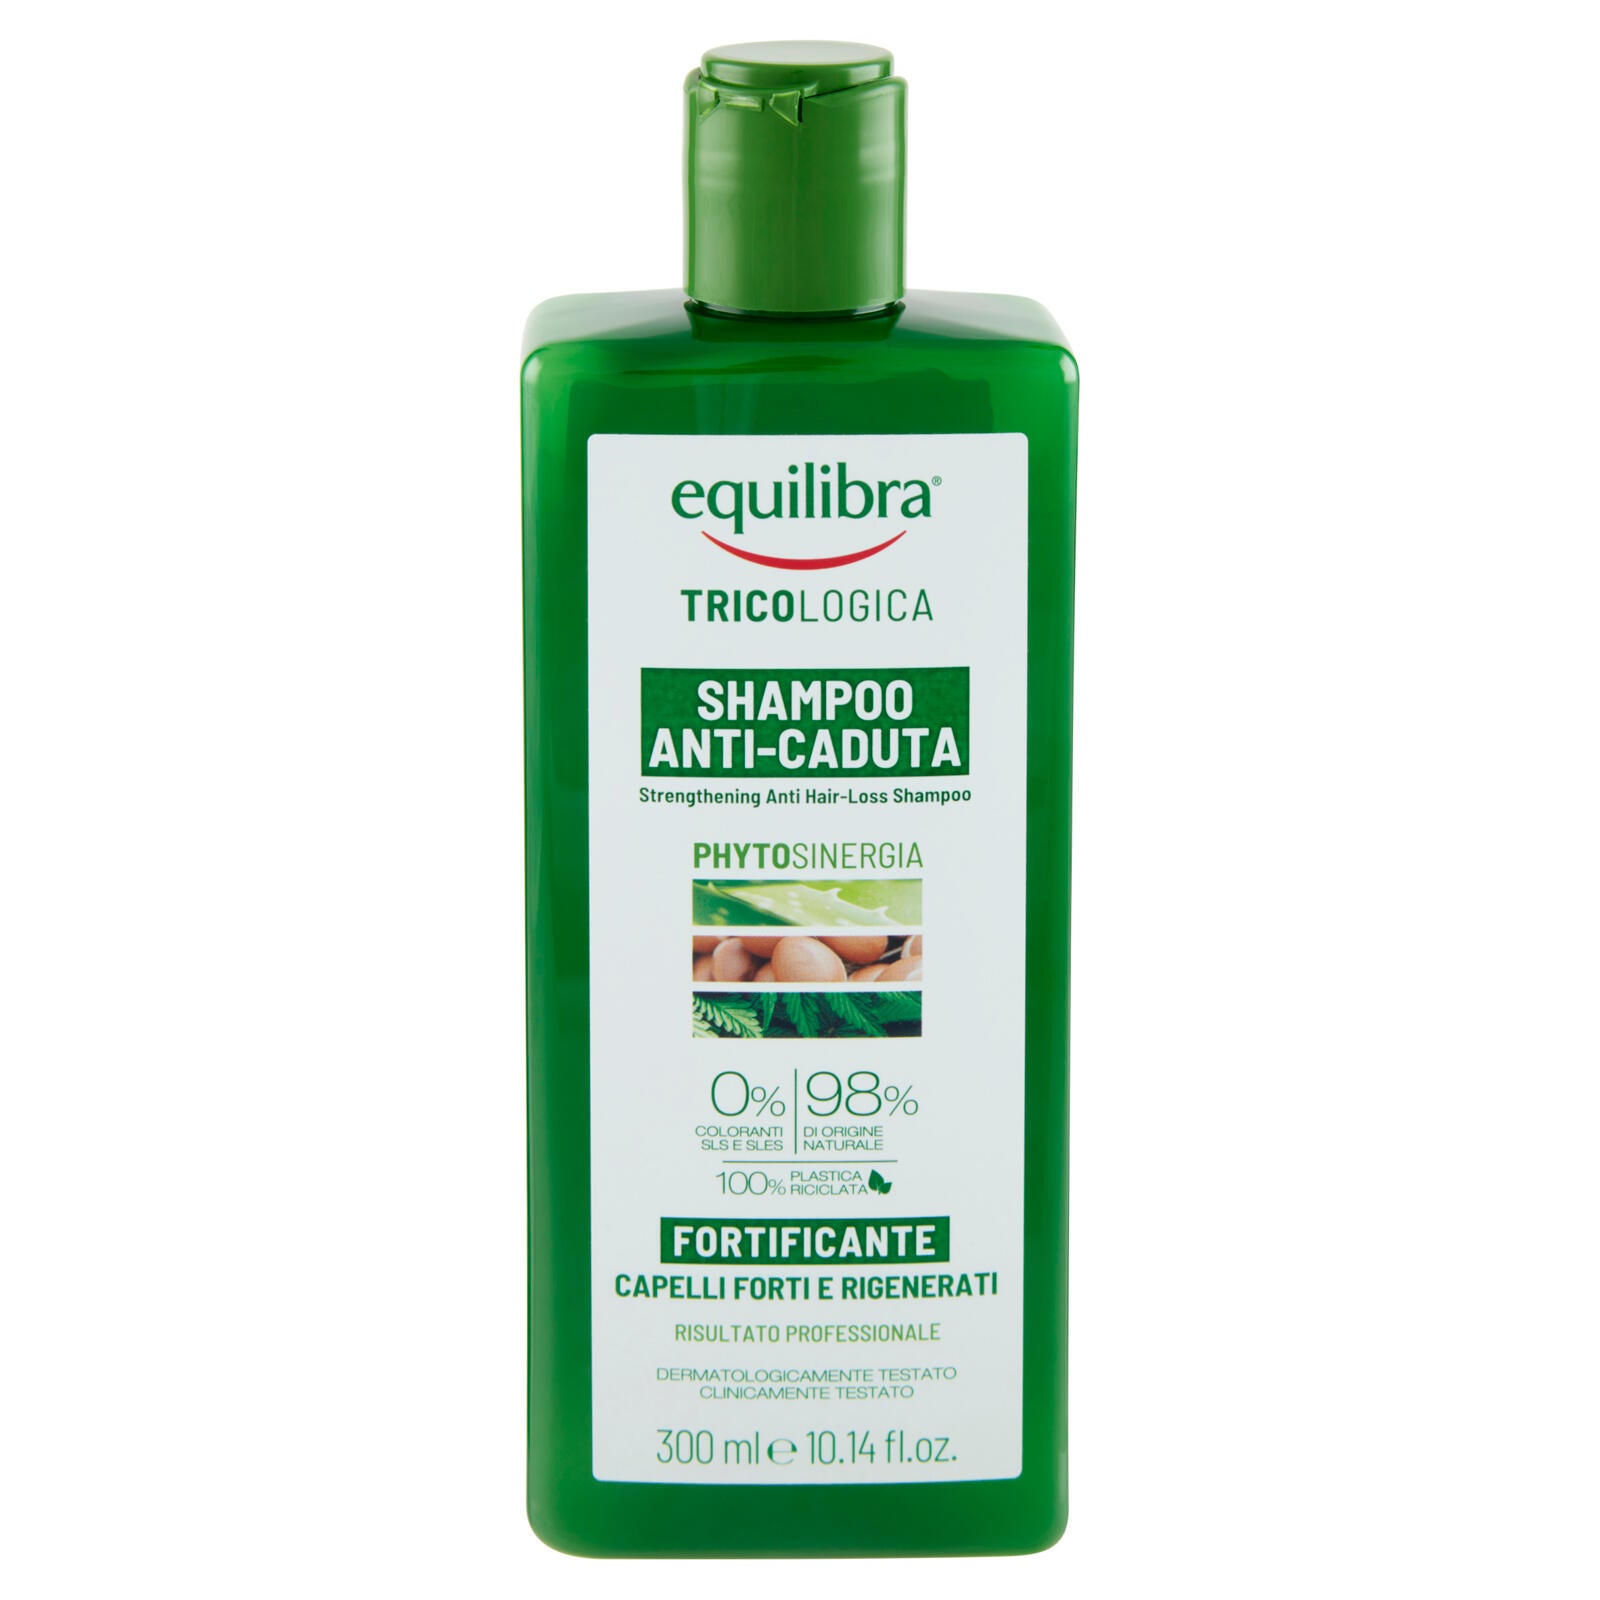 equilibra Tricologica Shampoo Anti-Caduta Fortificante 300 ml